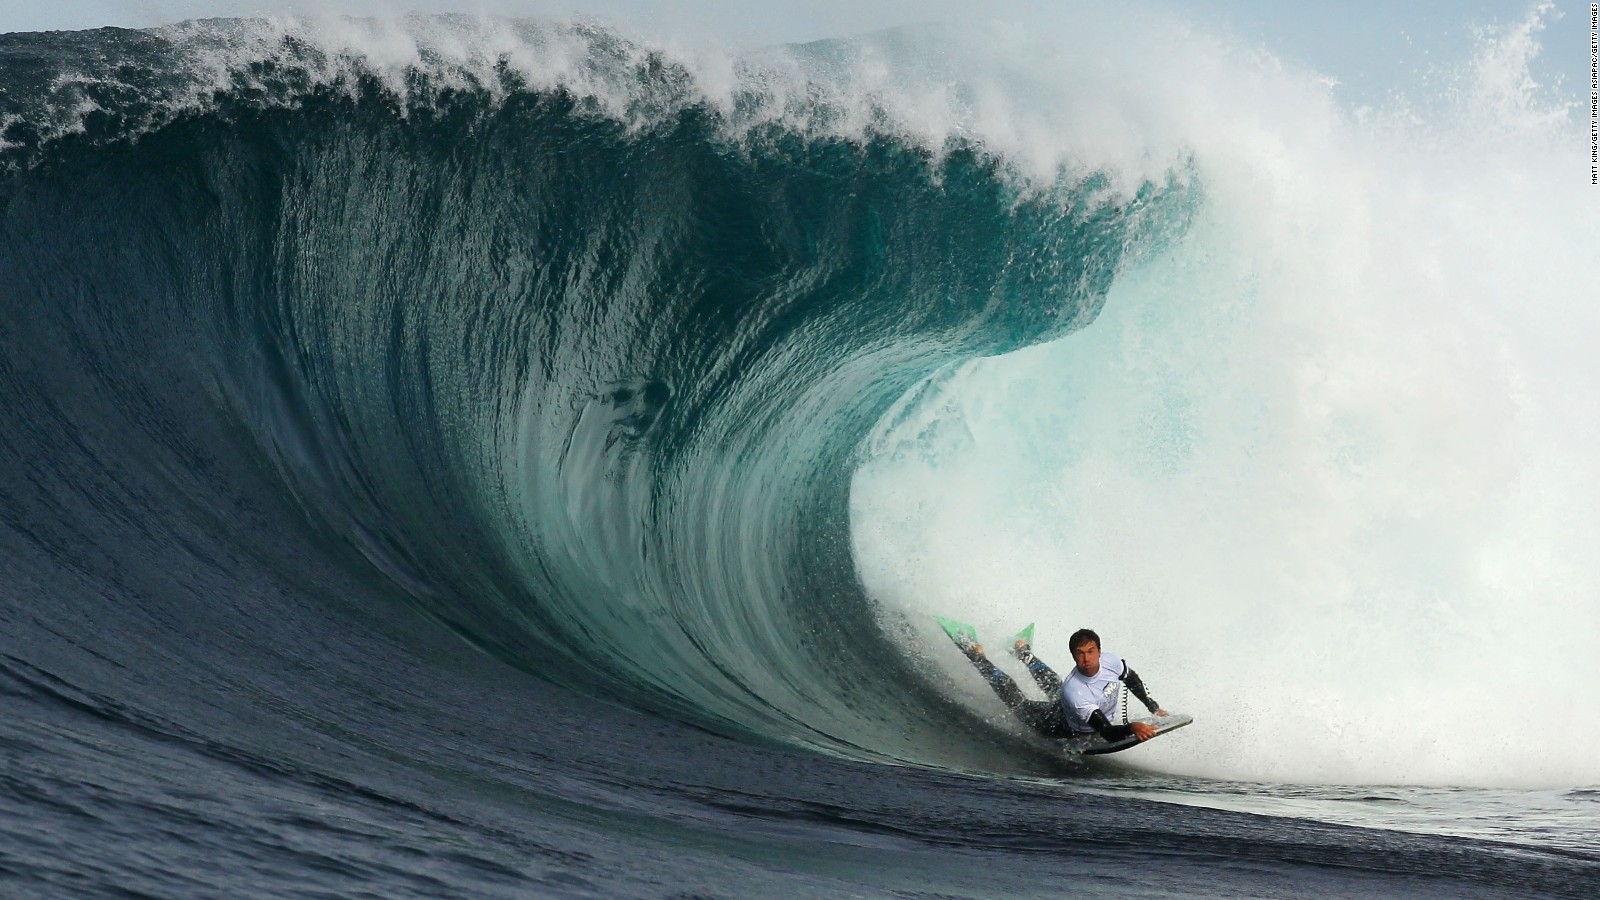 Sydney surfing best places to go CNN Travel